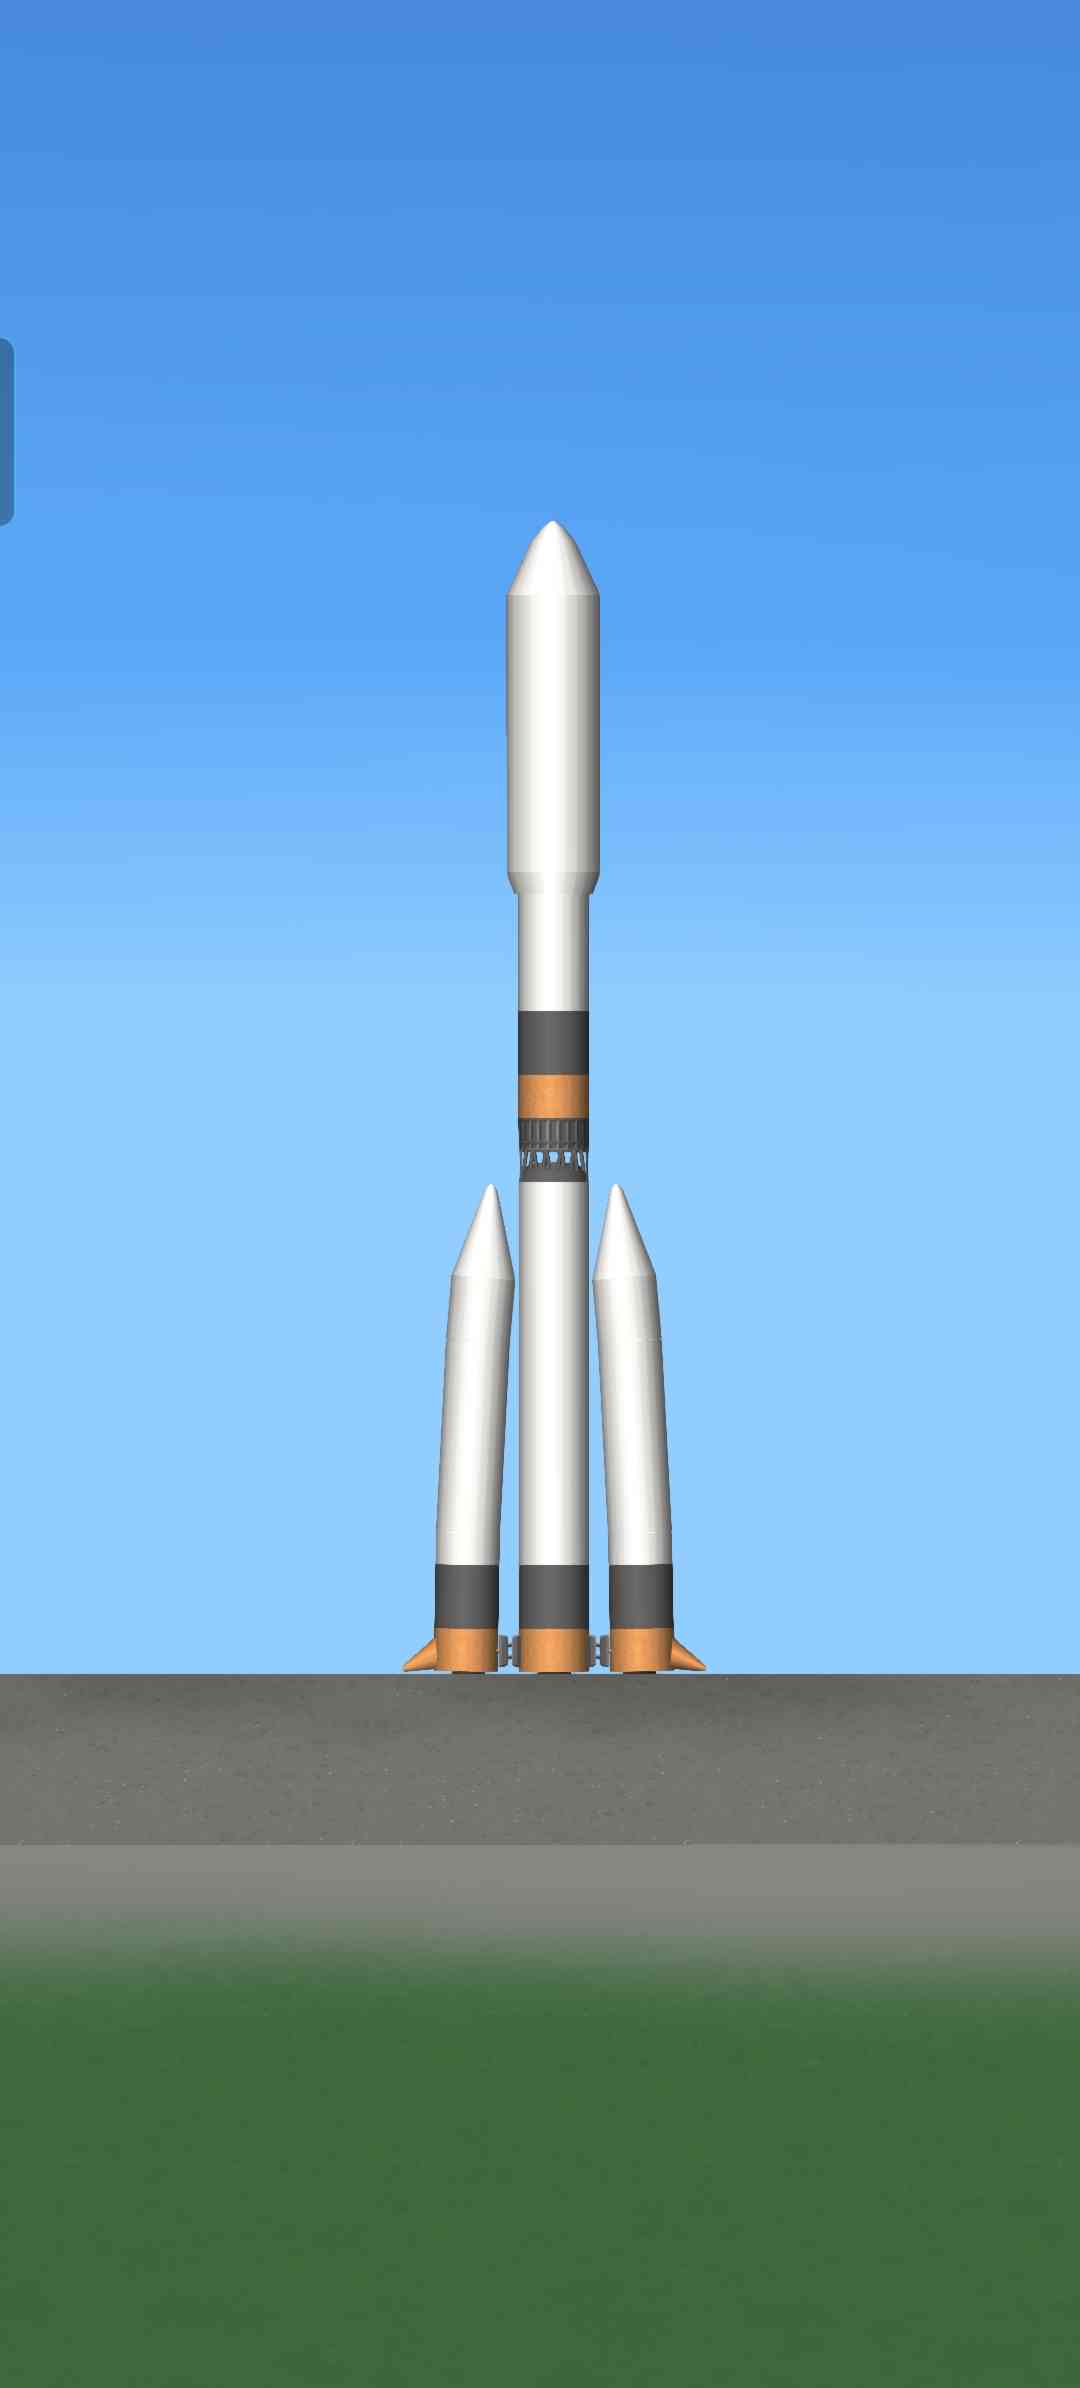 Soyuz ms Blueprint for Spaceflight Simulator